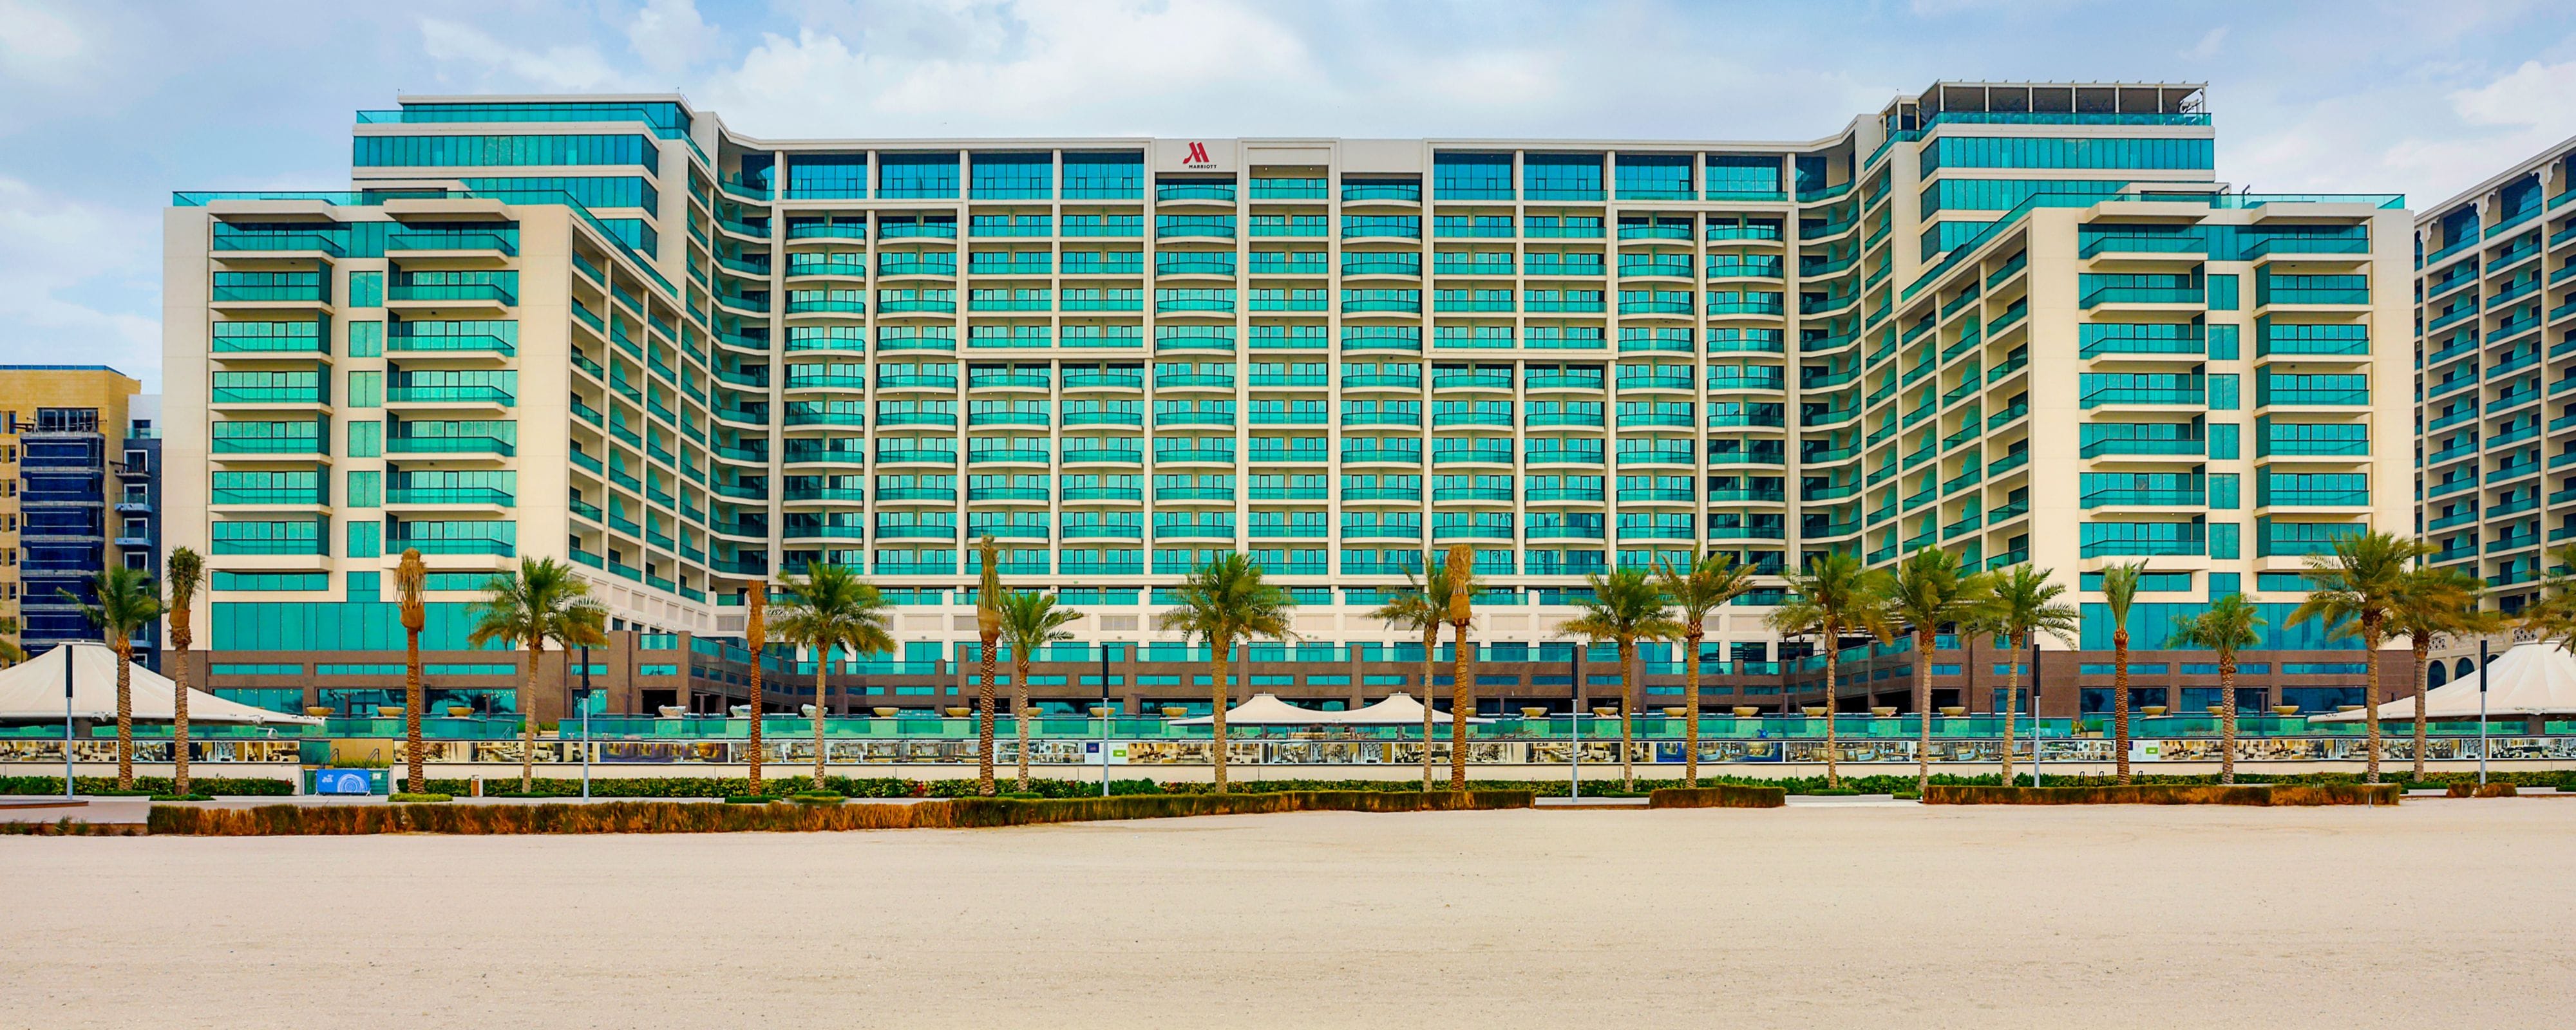 dubai-hotel-reviews-marriott-resort-palm-jumeirah-dubai